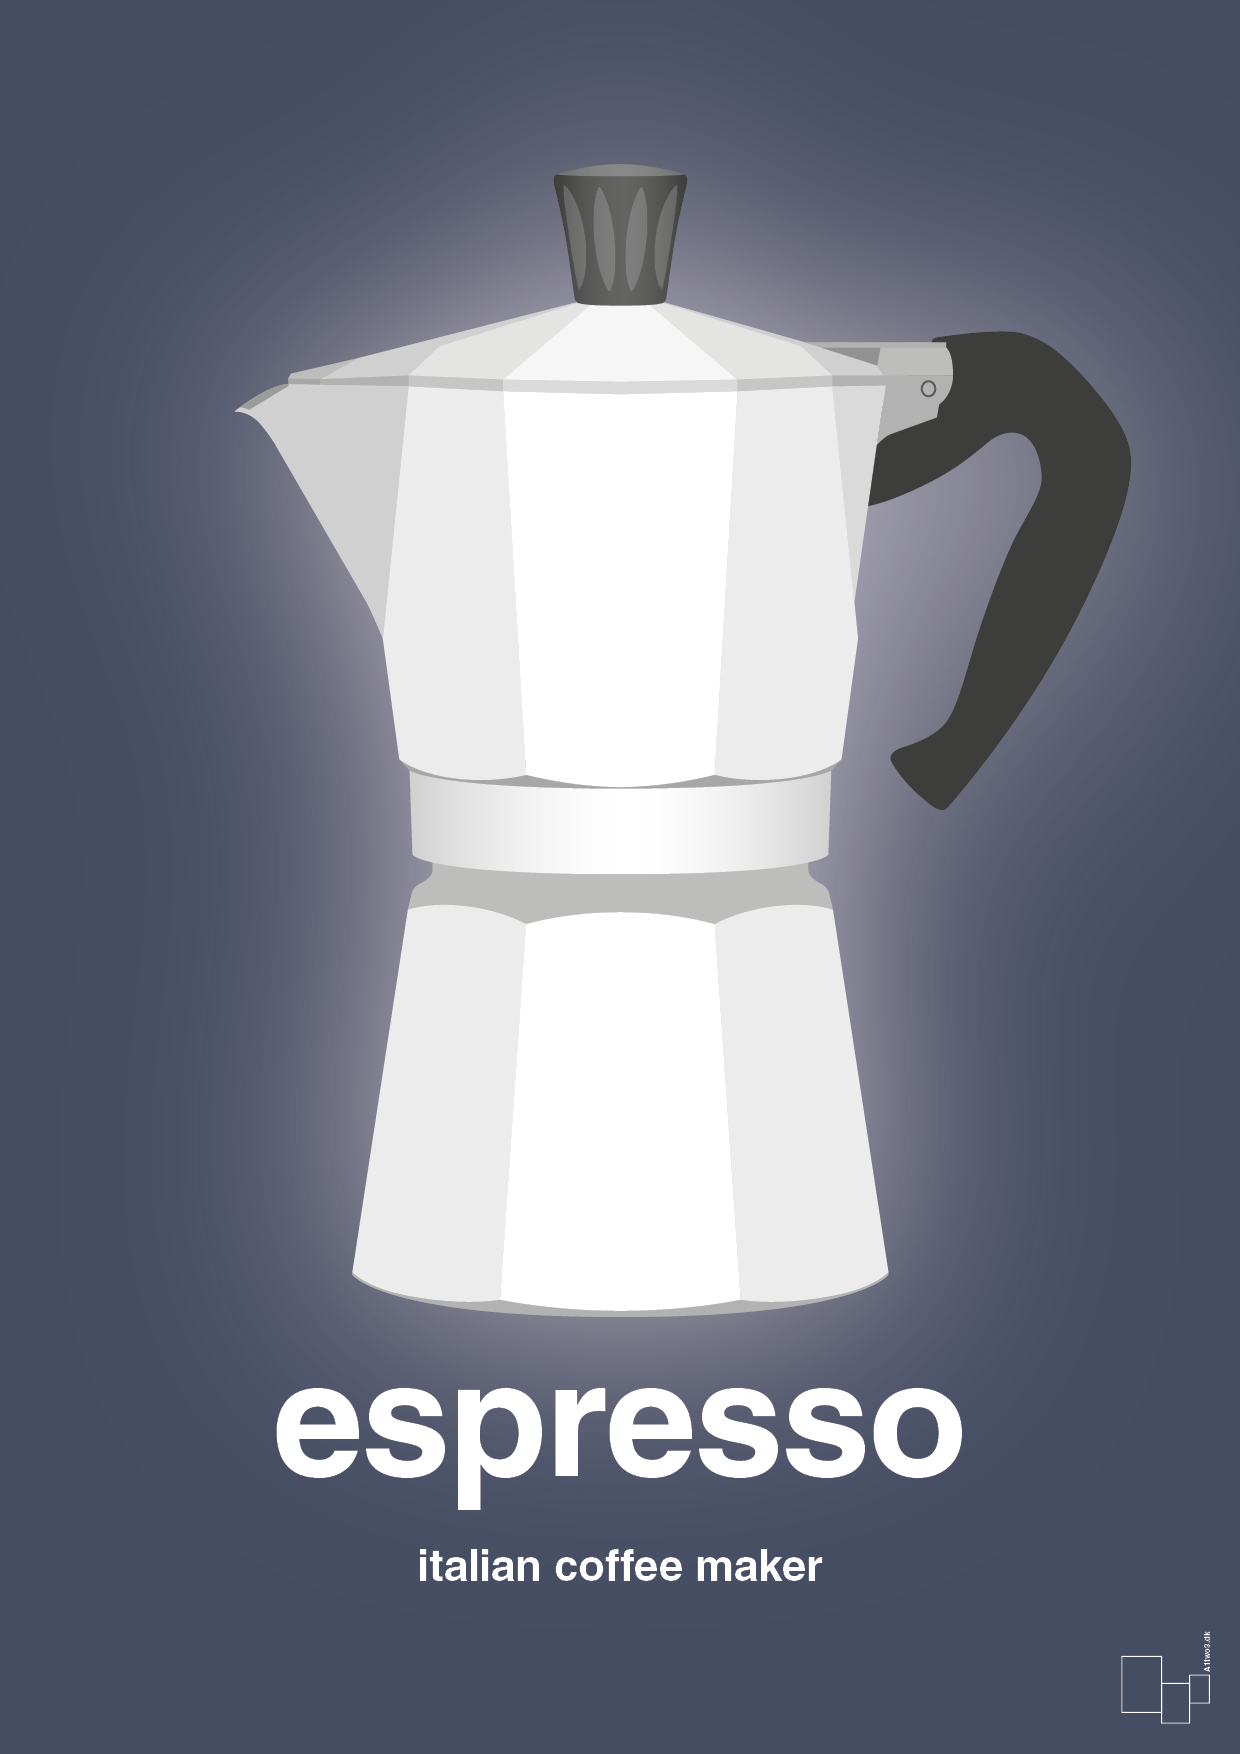 espresso - italian coffee maker - Plakat med Mad & Drikke i Petrol